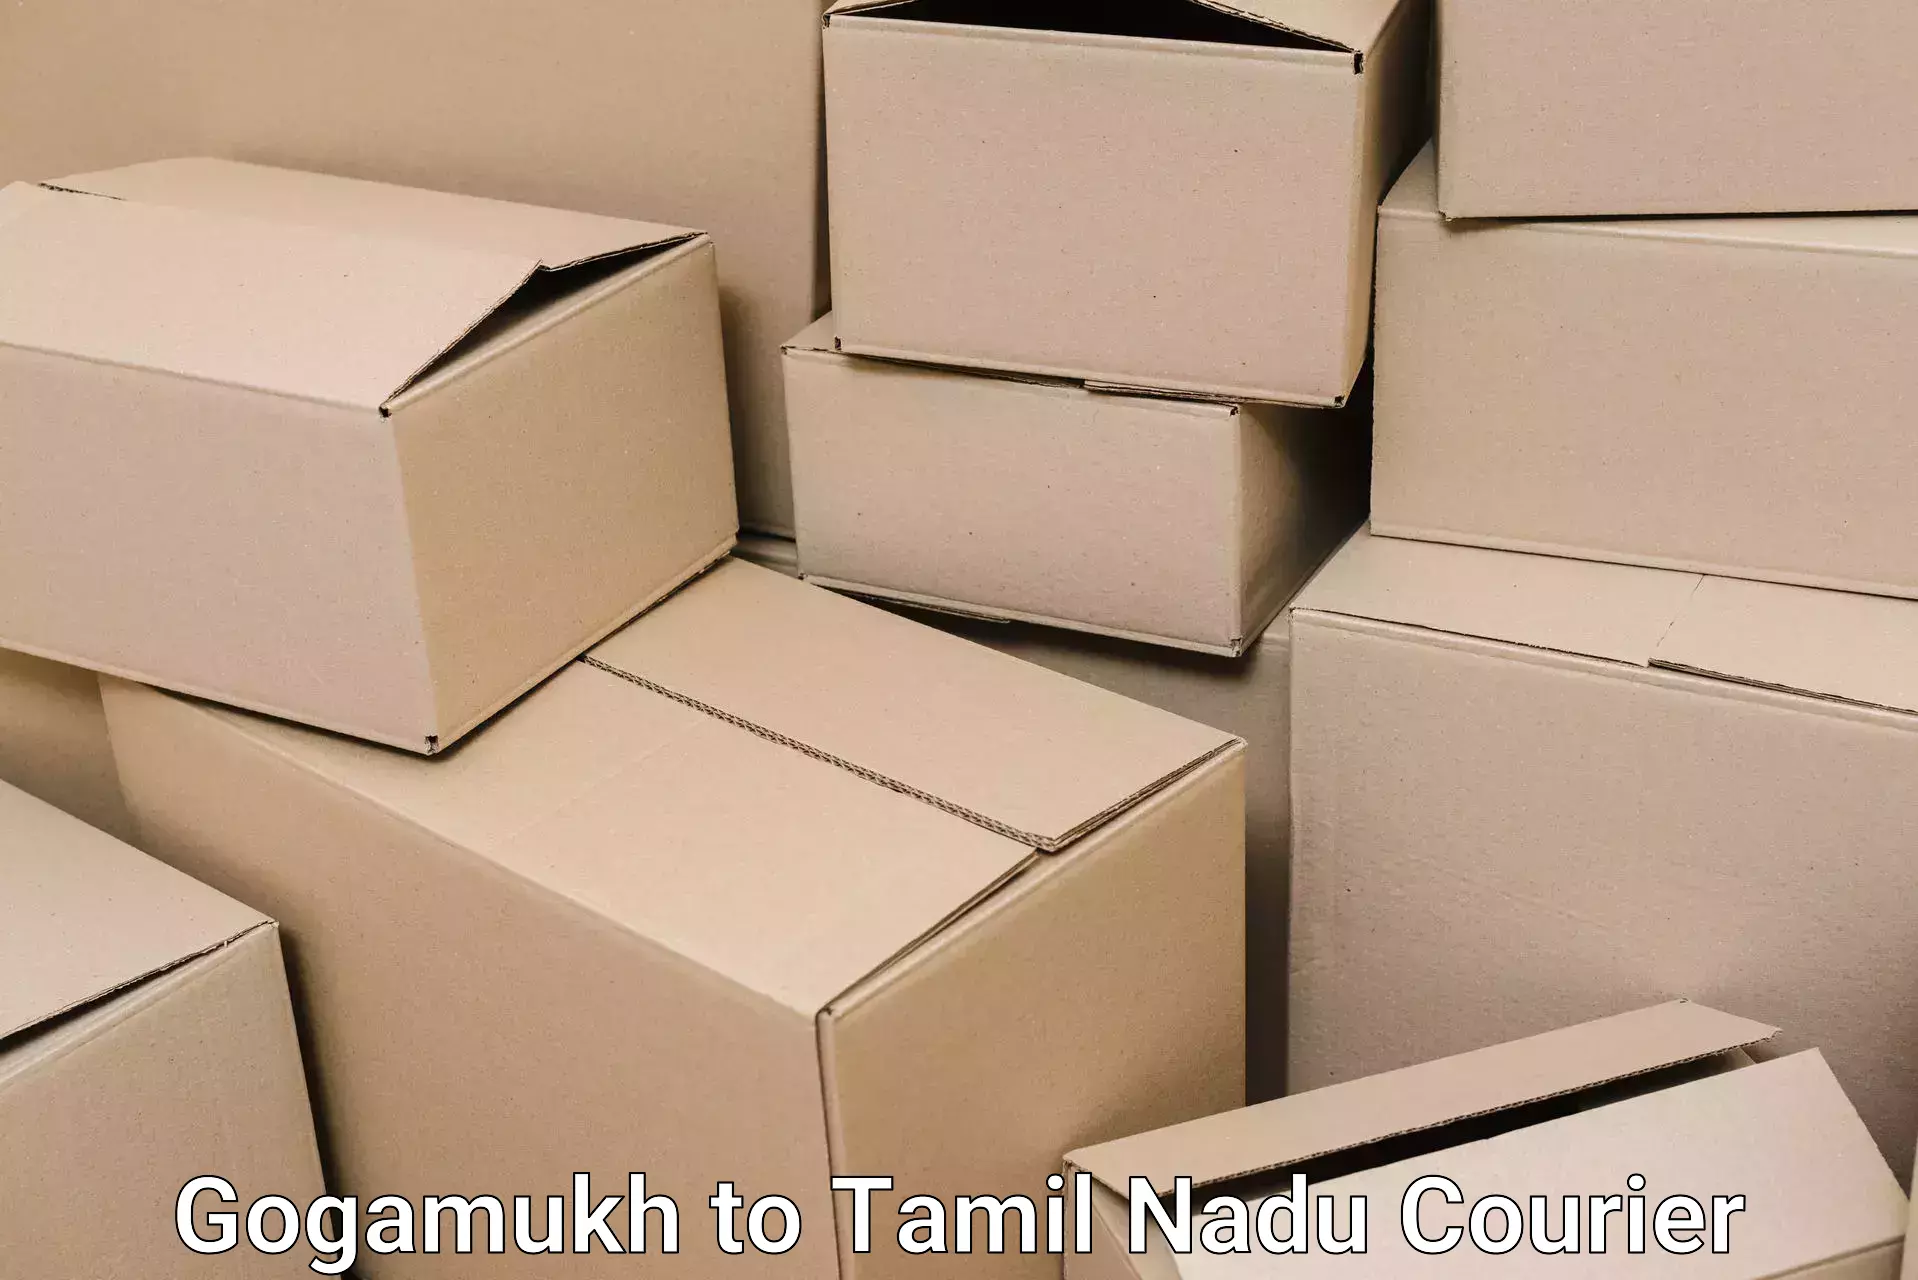 Trusted relocation experts Gogamukh to Villupuram